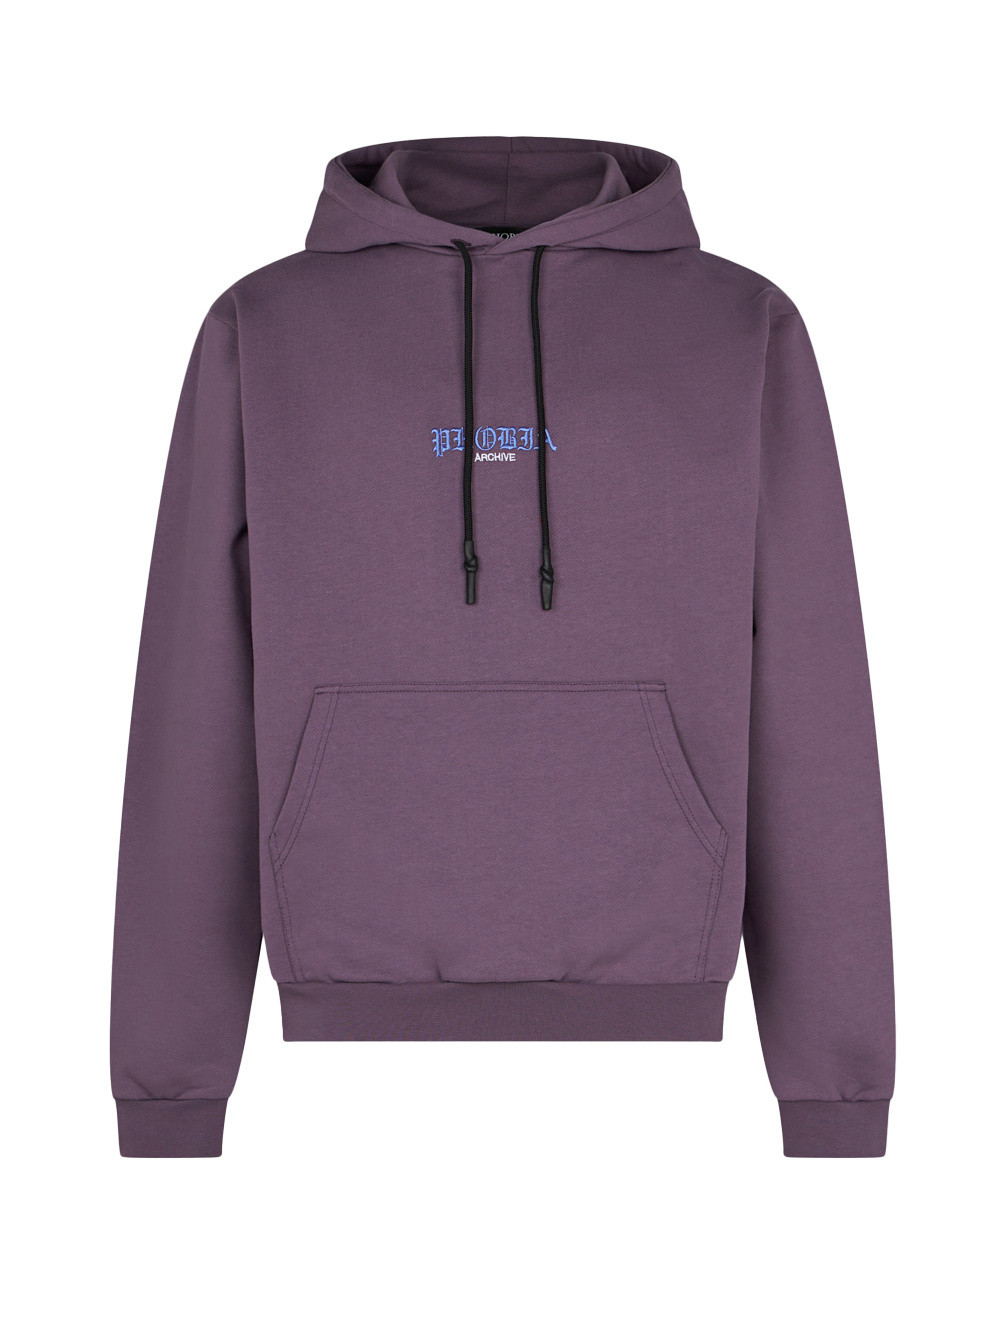 Phobia - Cotton sweatshirt with print, Purple, large image number 0